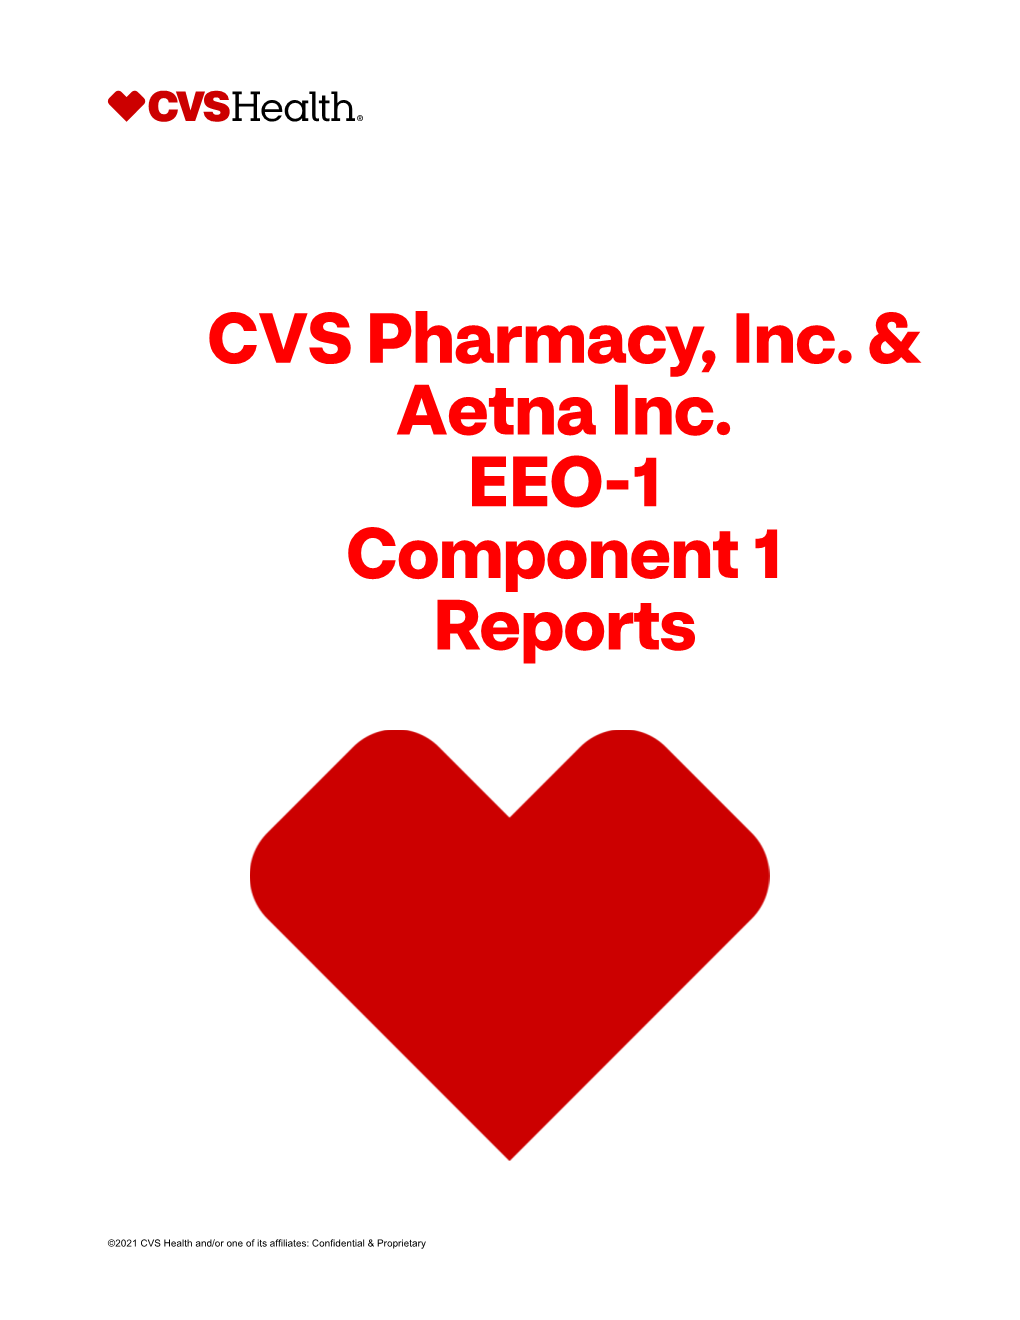 CVS Pharmacy, Inc. & Aetna Inc. EEO-1 Component 1 Reports